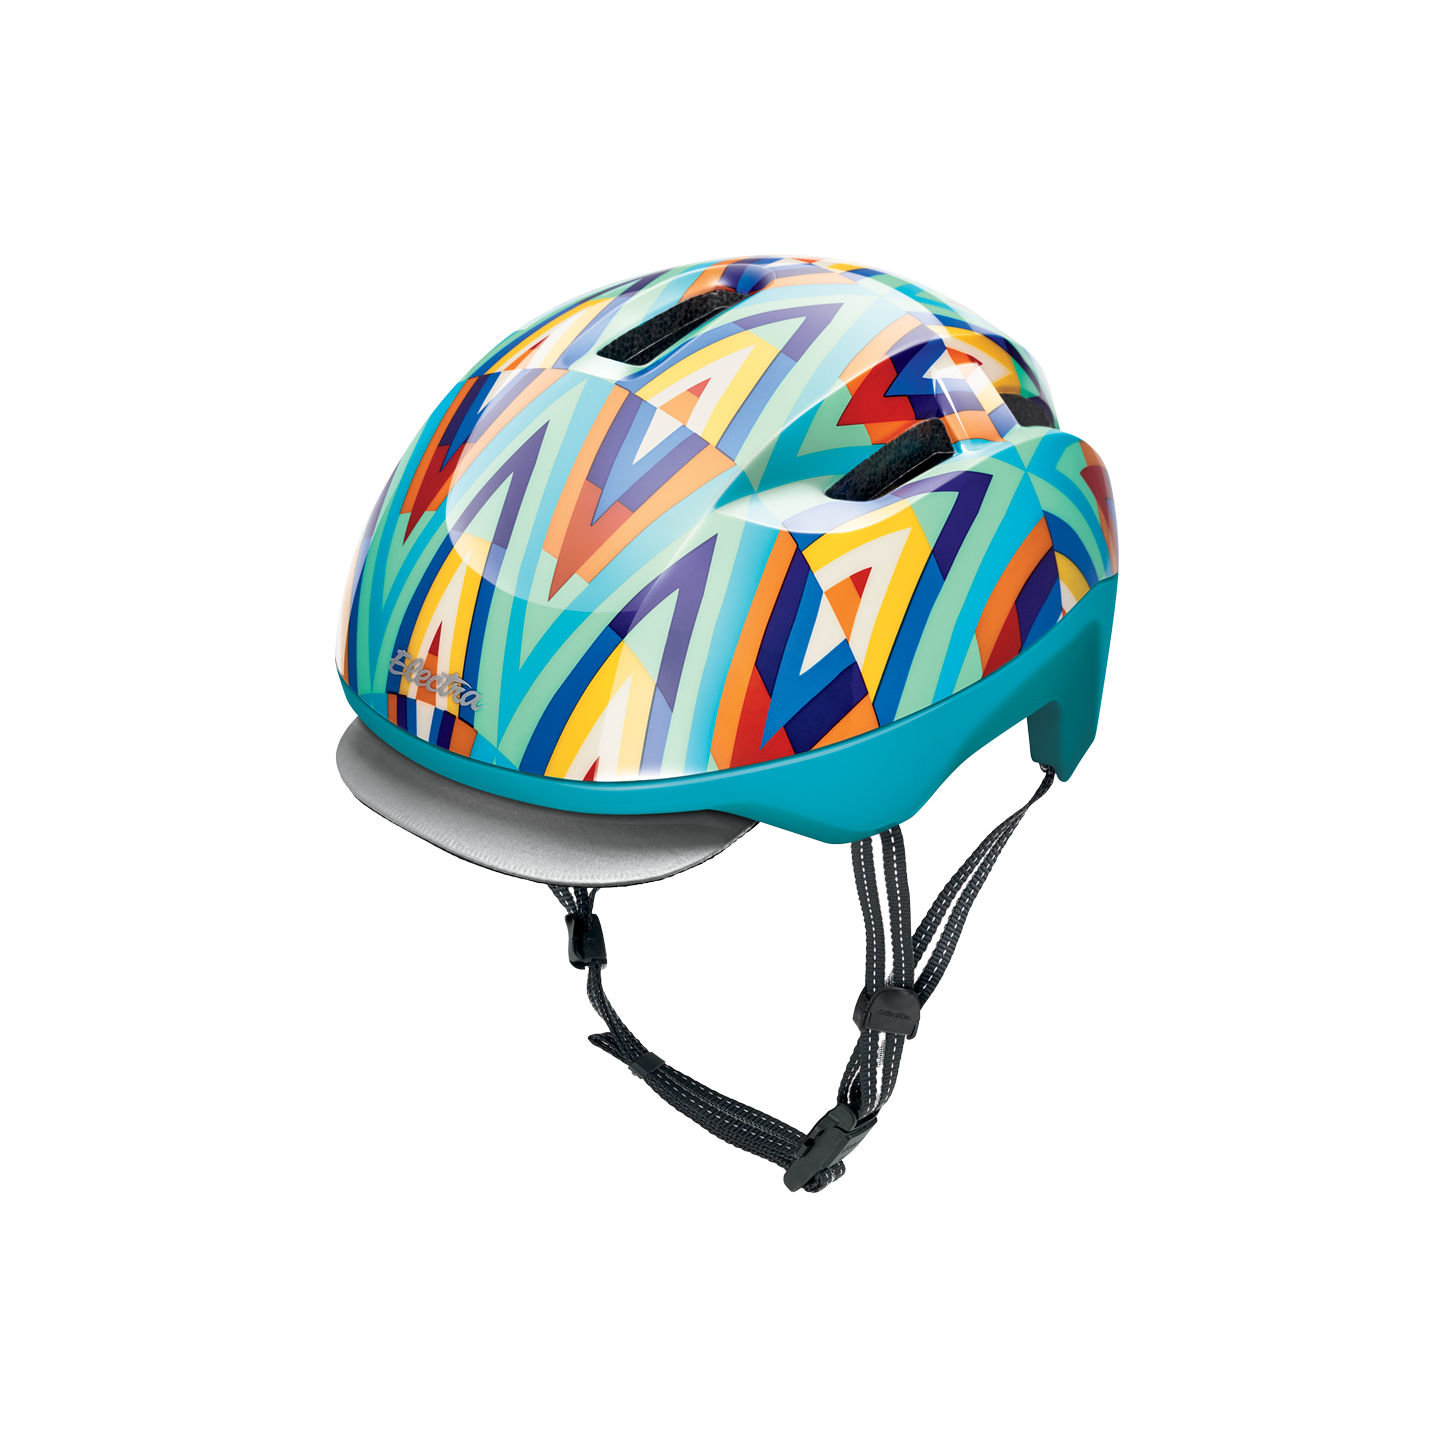 electra bike helmet canada